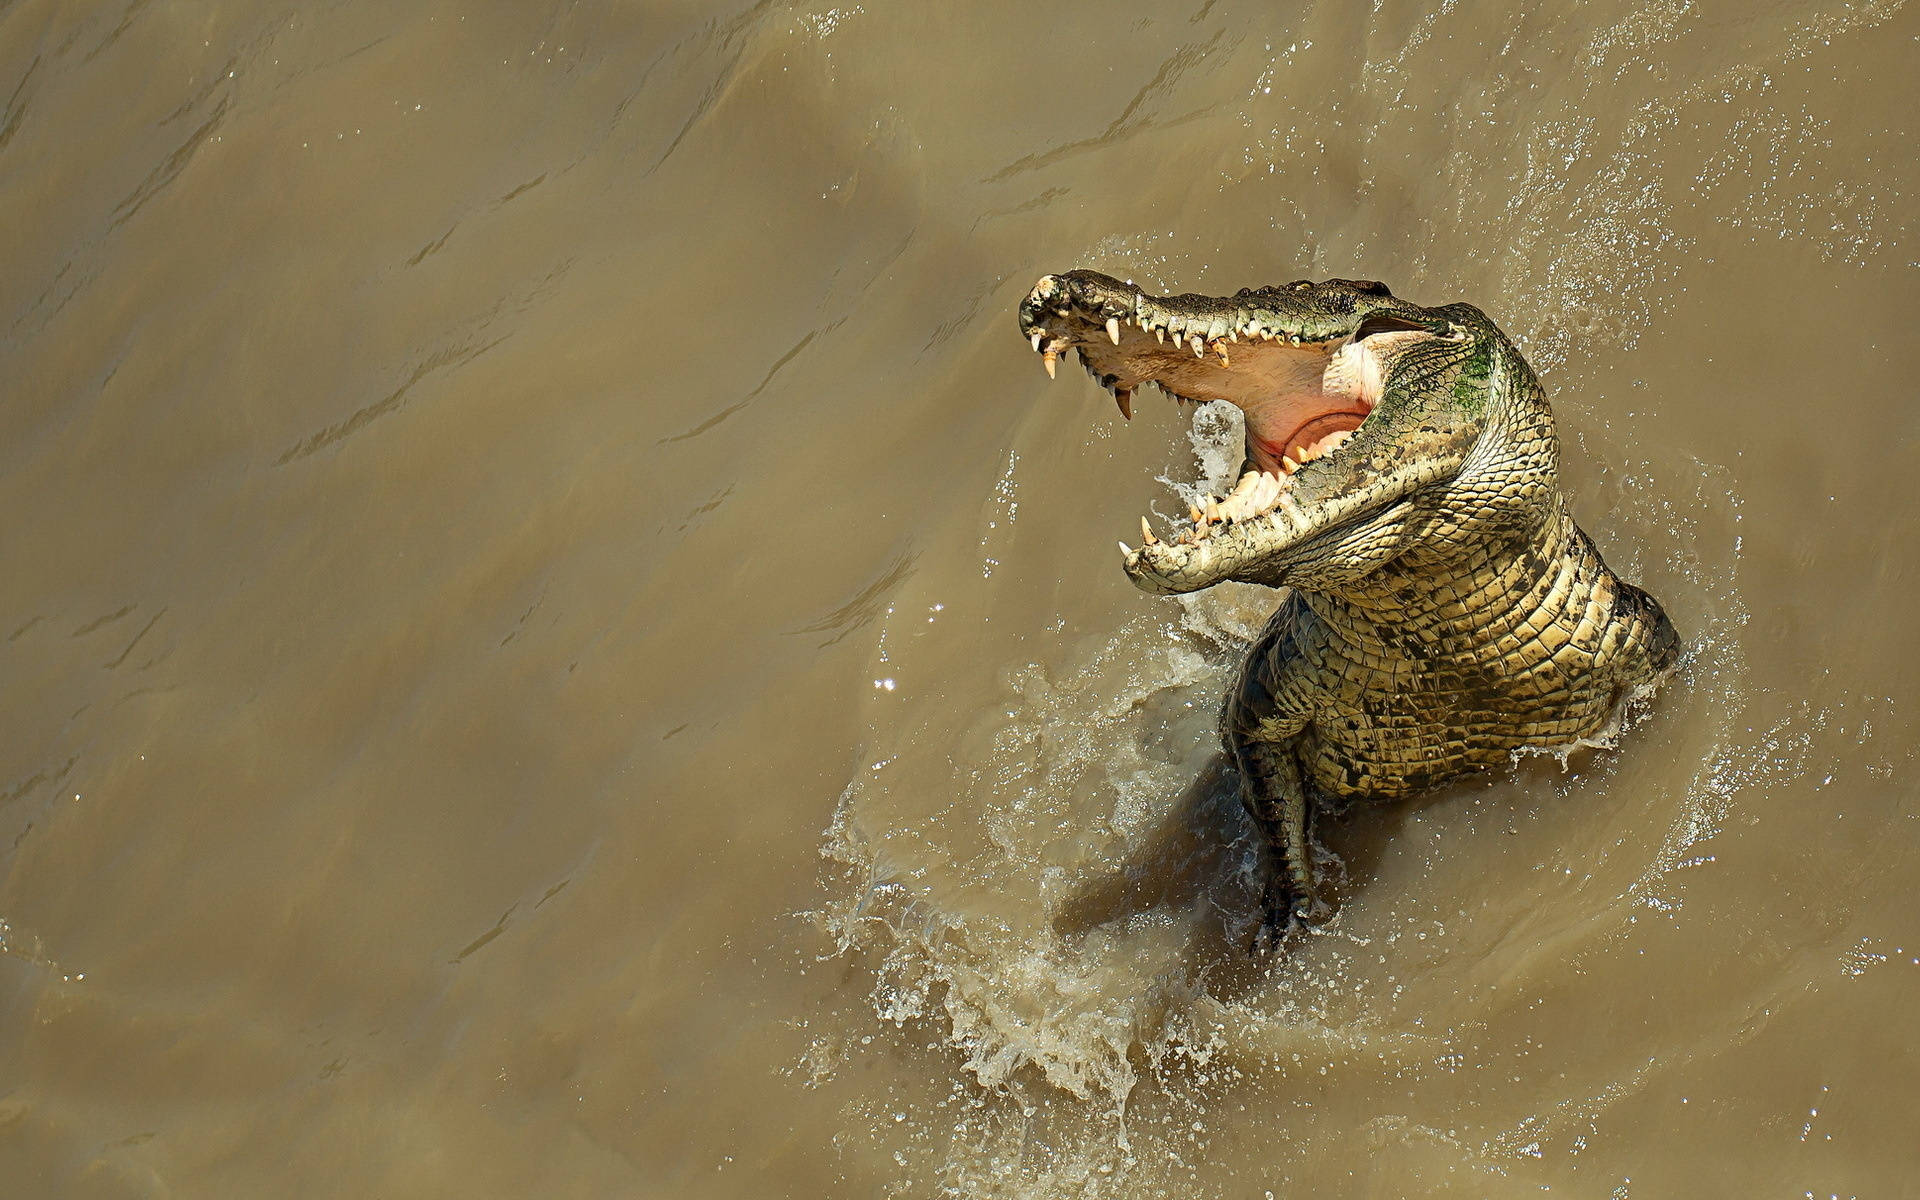 Cool Alligator Shot